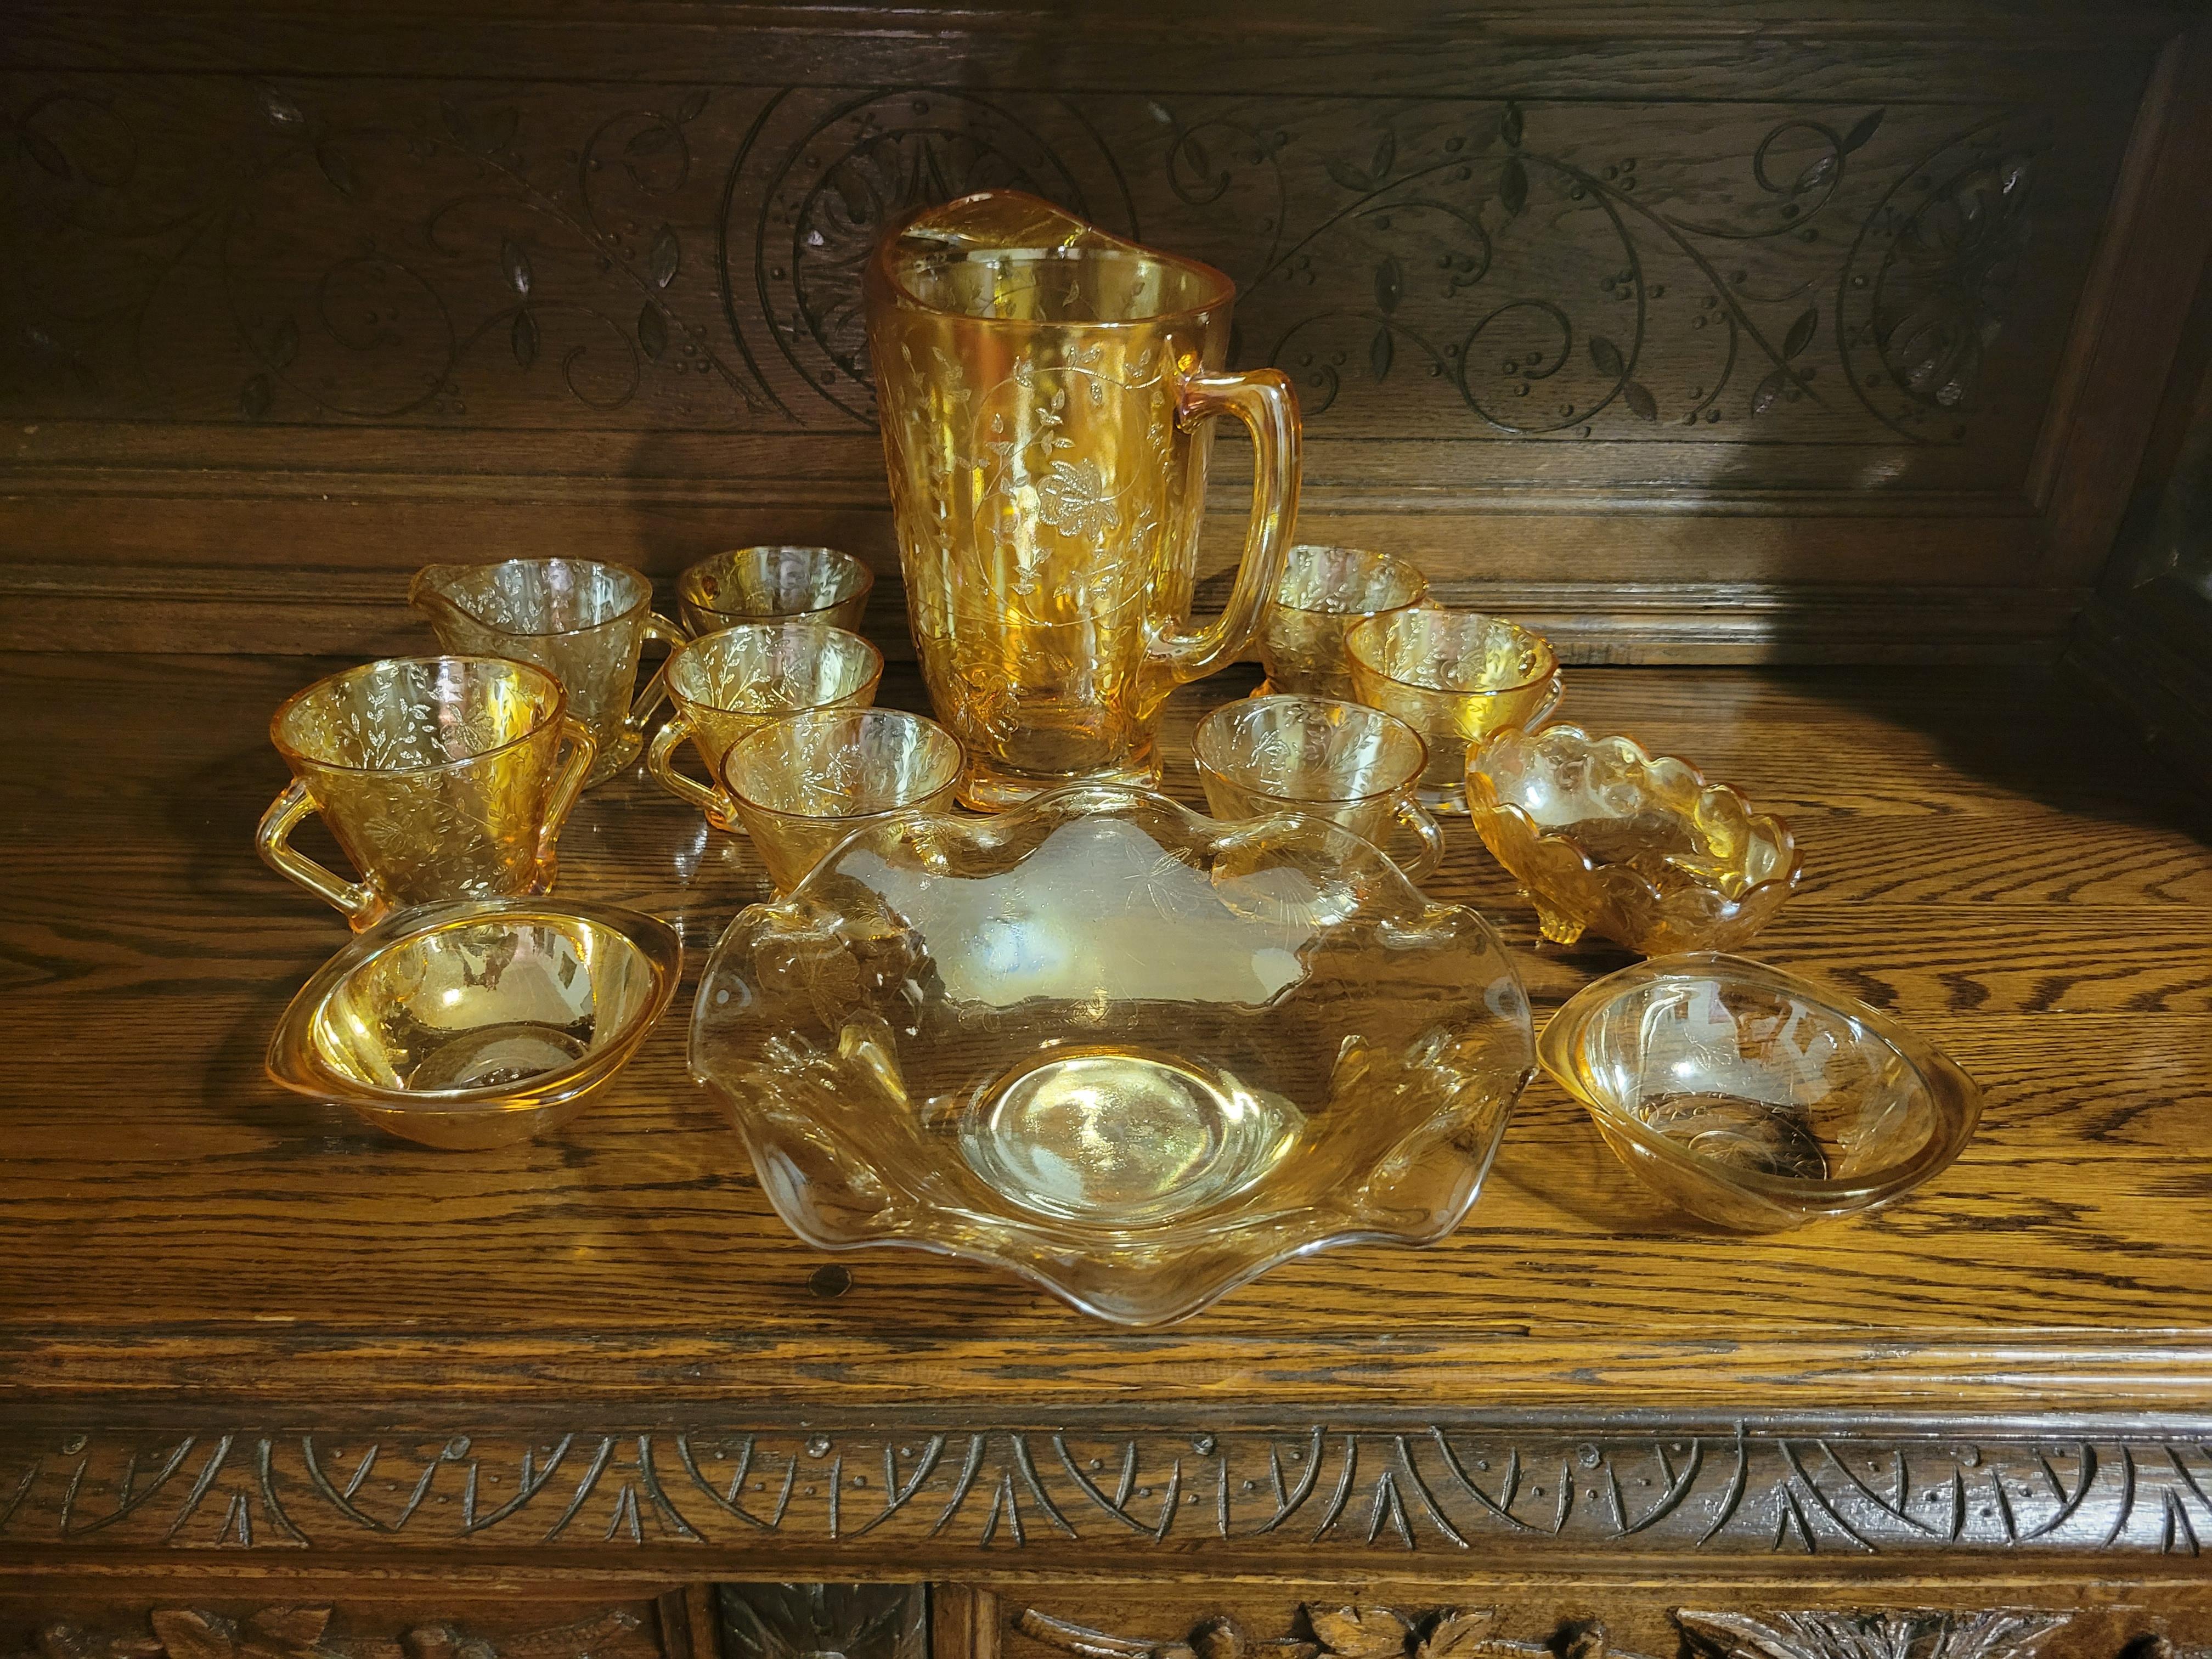 1964 Jeannette Floragold Iridescent Glassware Set - 13 pieces For Sale 2